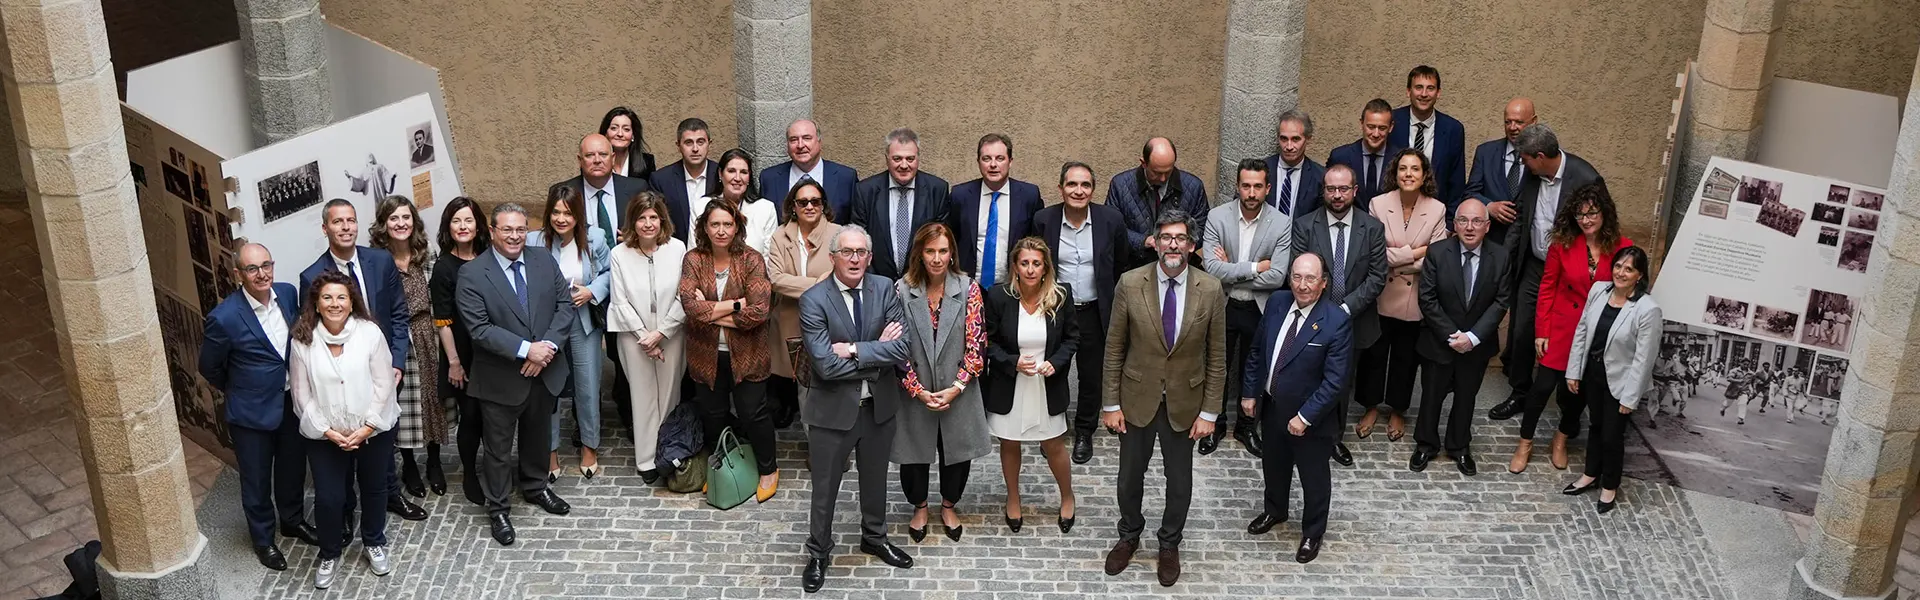 SGR Cesgar celebra su XLIII Asamblea General en Pamplona 1